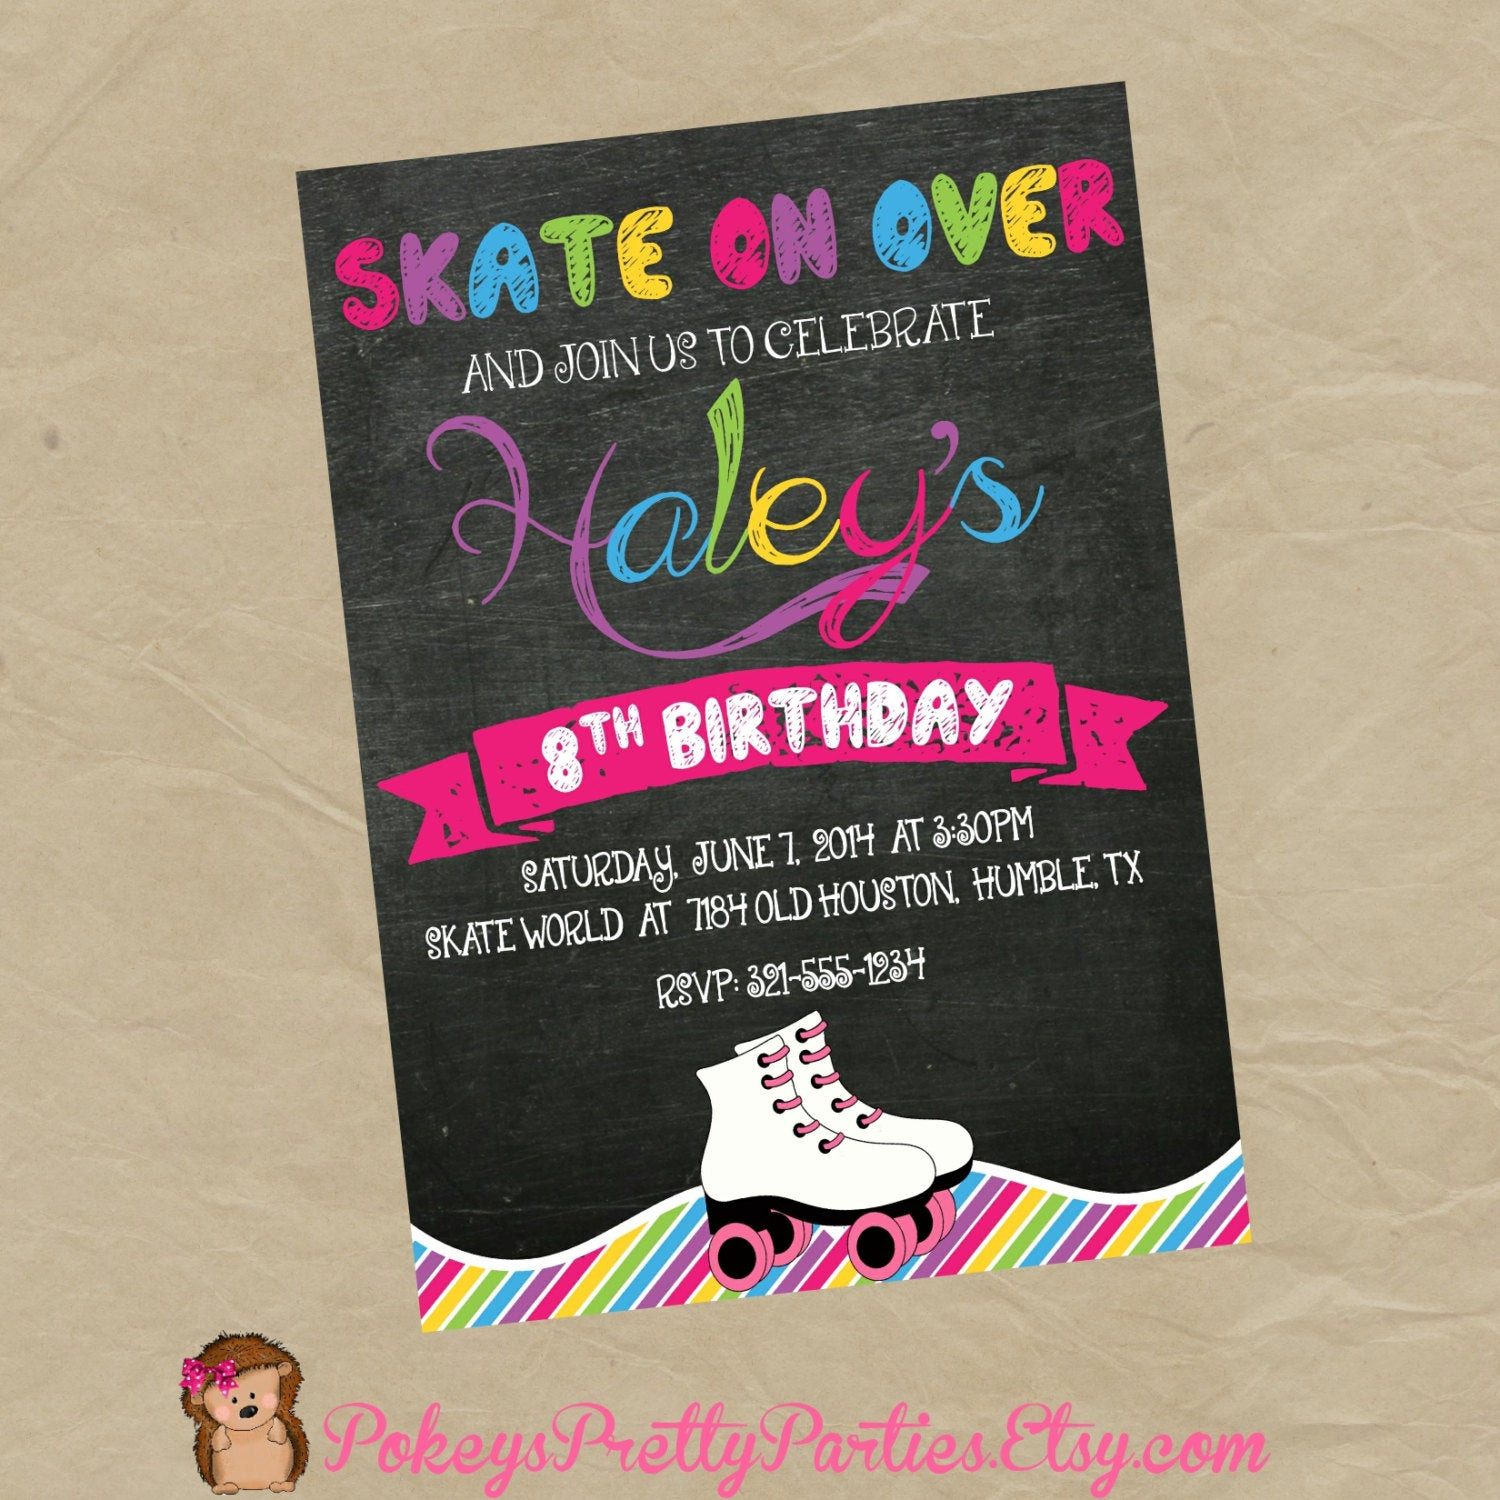 Roller Skating Birthday Party Invitations
 Roller Skating Birthday Party Invitation Digital or Printed